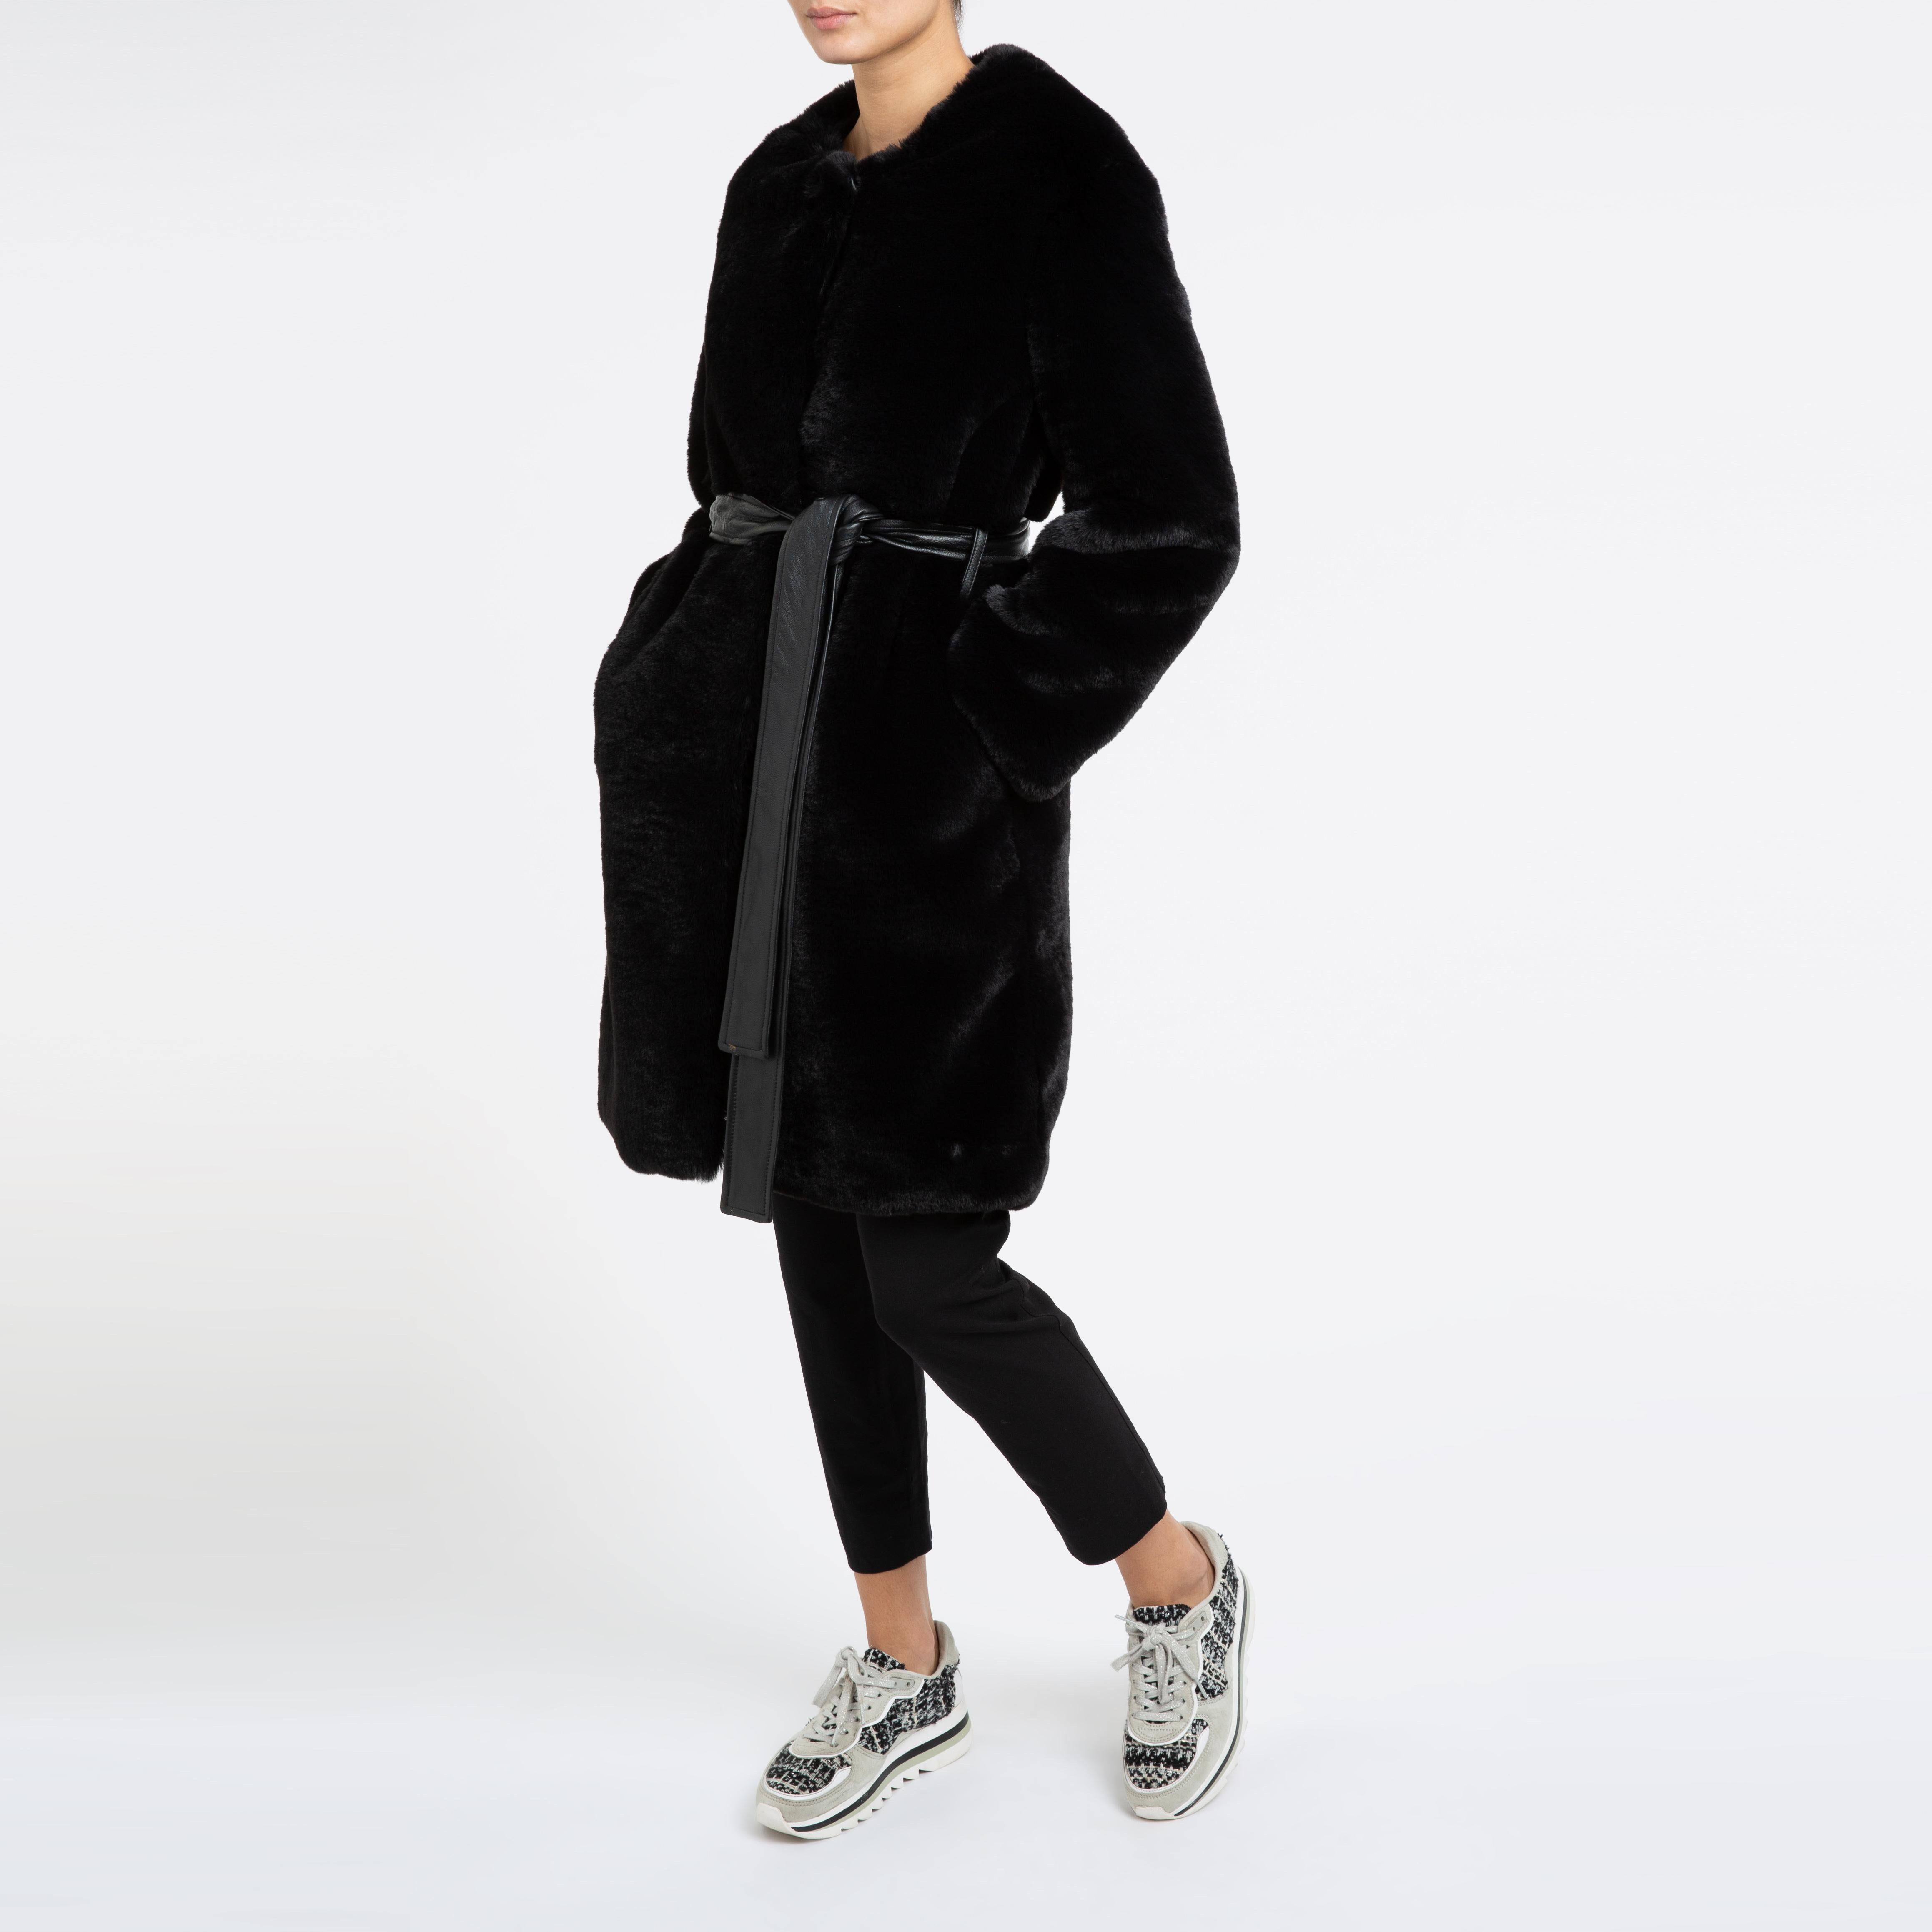 Verheyen London Serena  Collarless Faux Fur Coat in Black - Size uk 12  8